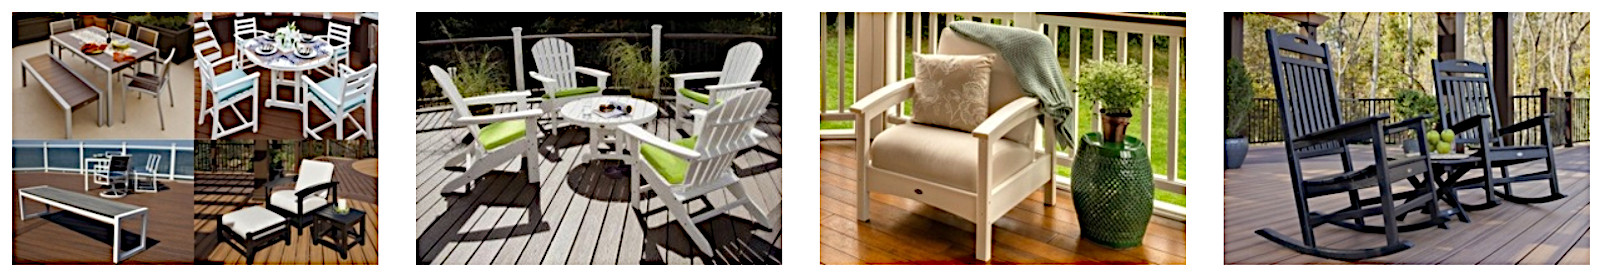 Cost-effective Trex outdoor furniture